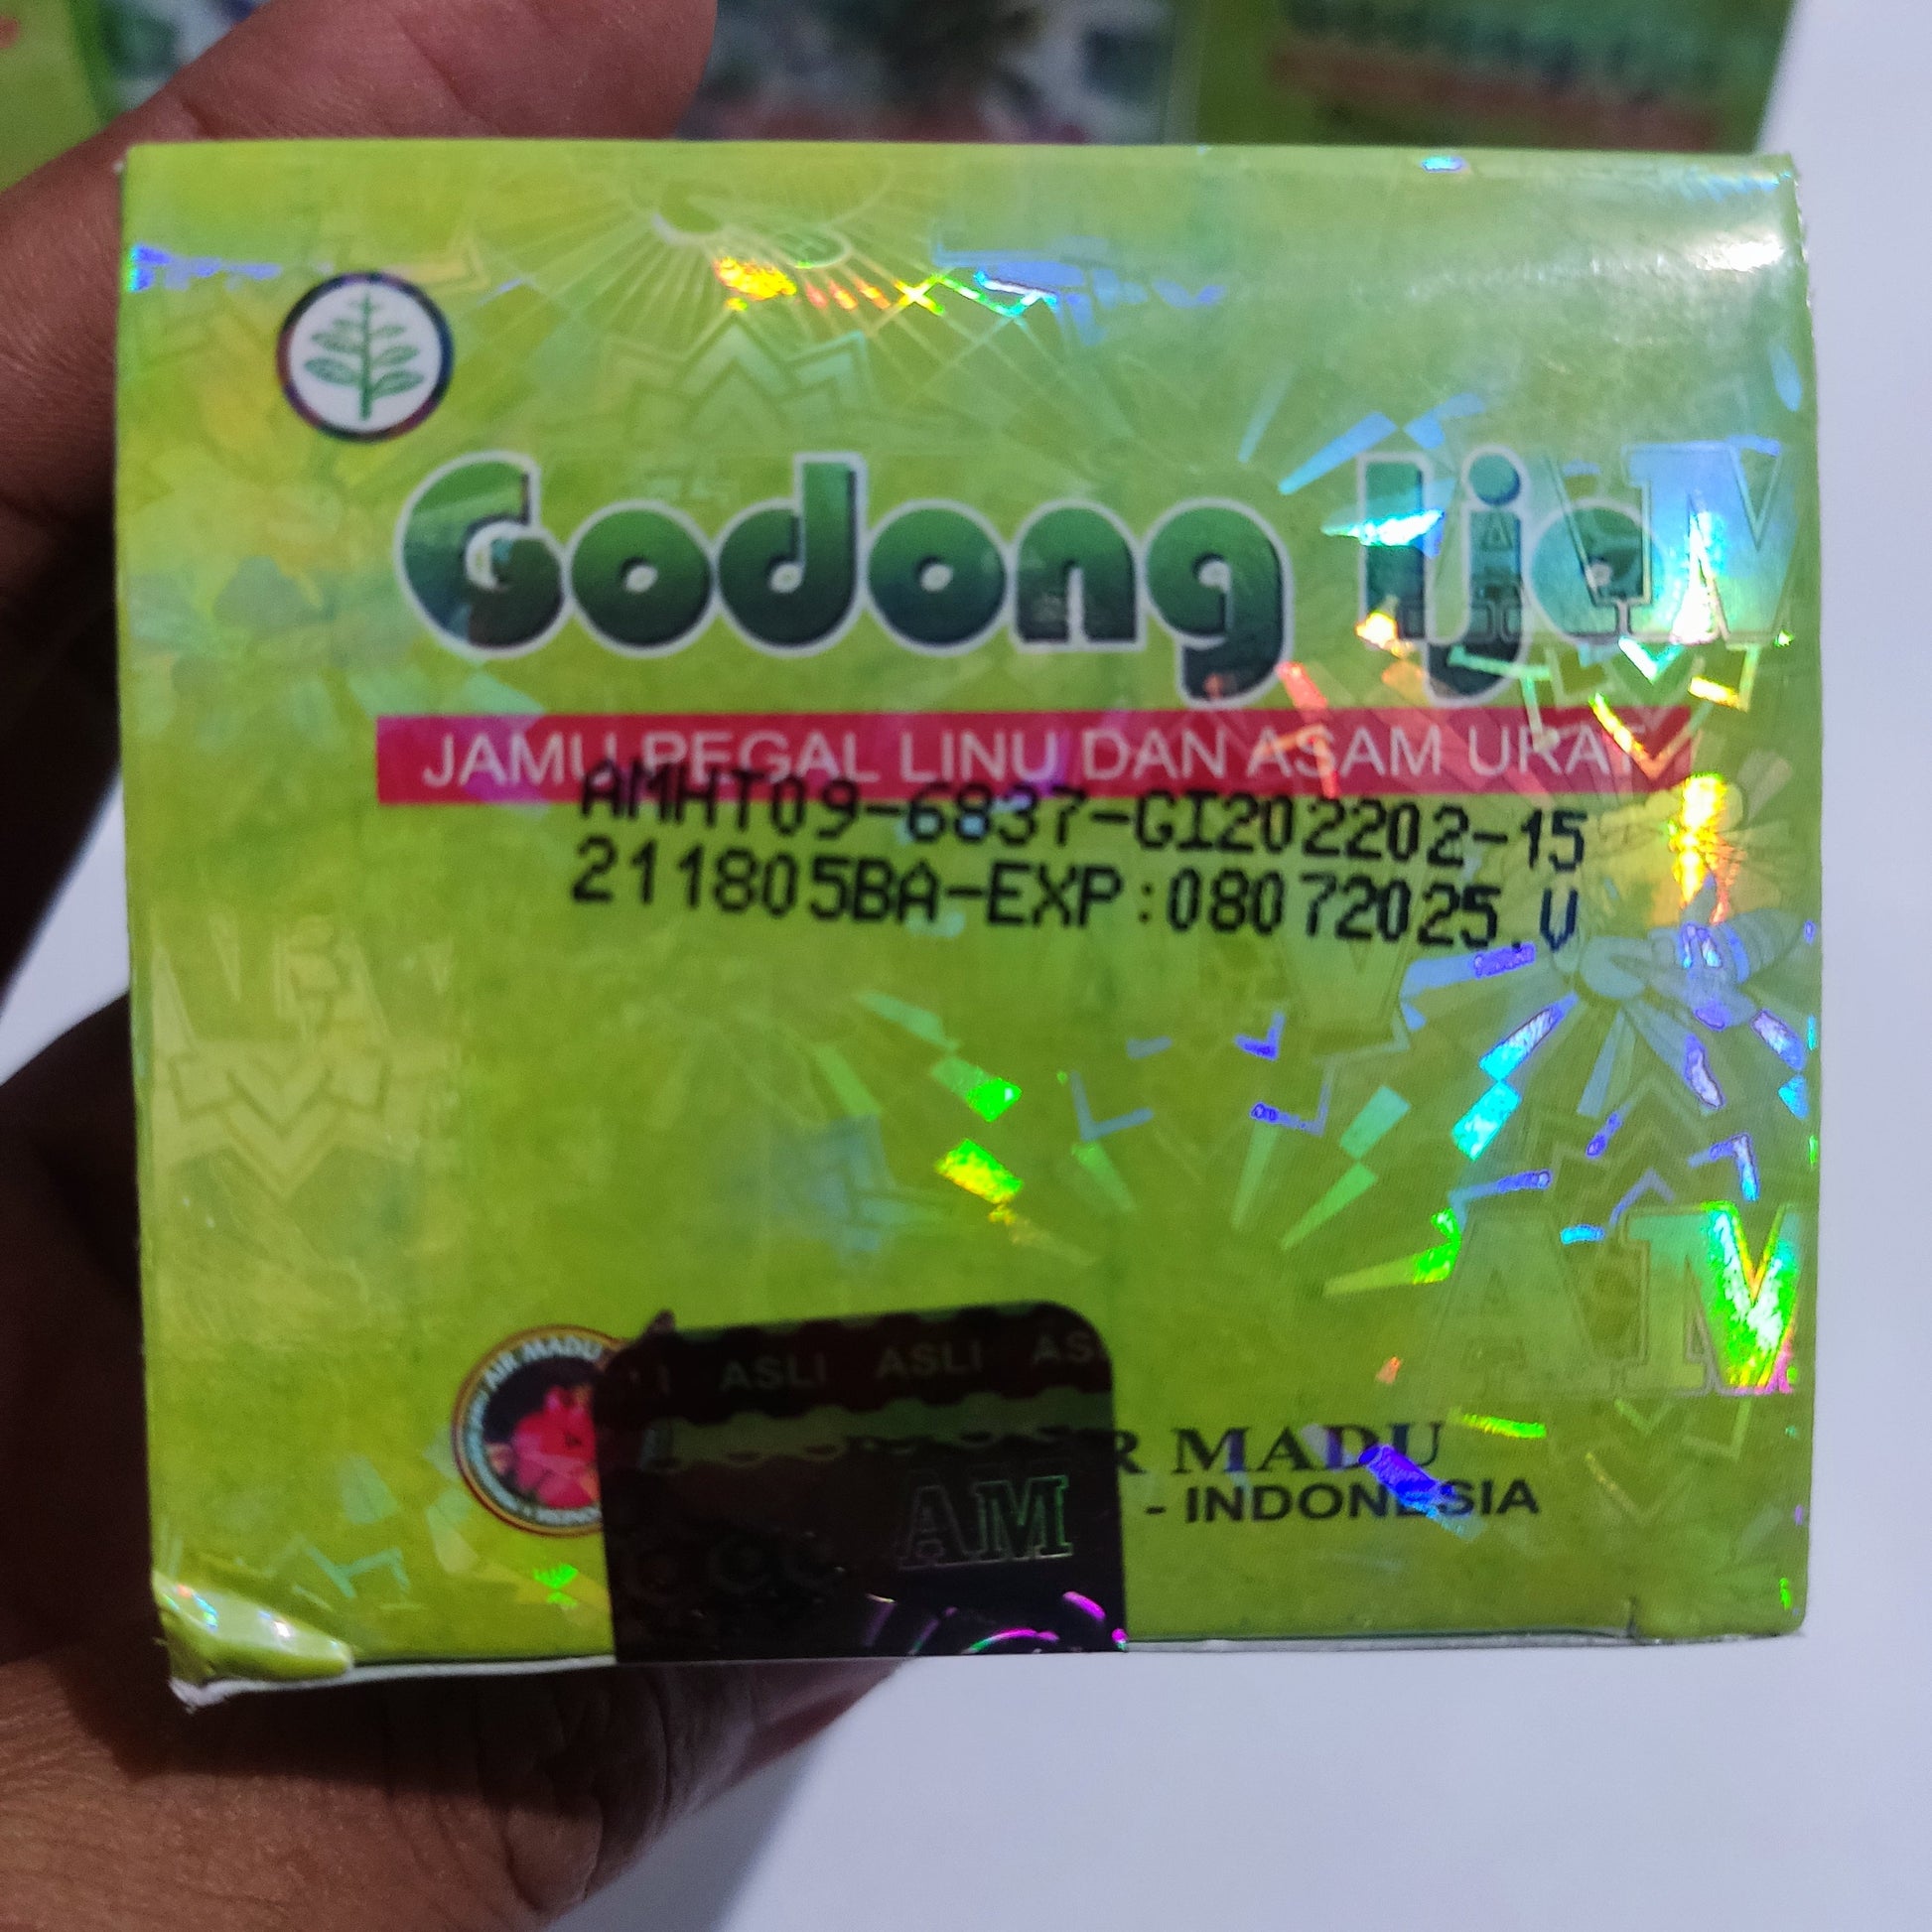 Godong Ijo Original Herbal Capsules For Gout, Chronic Rheumatism, And Cholesterol